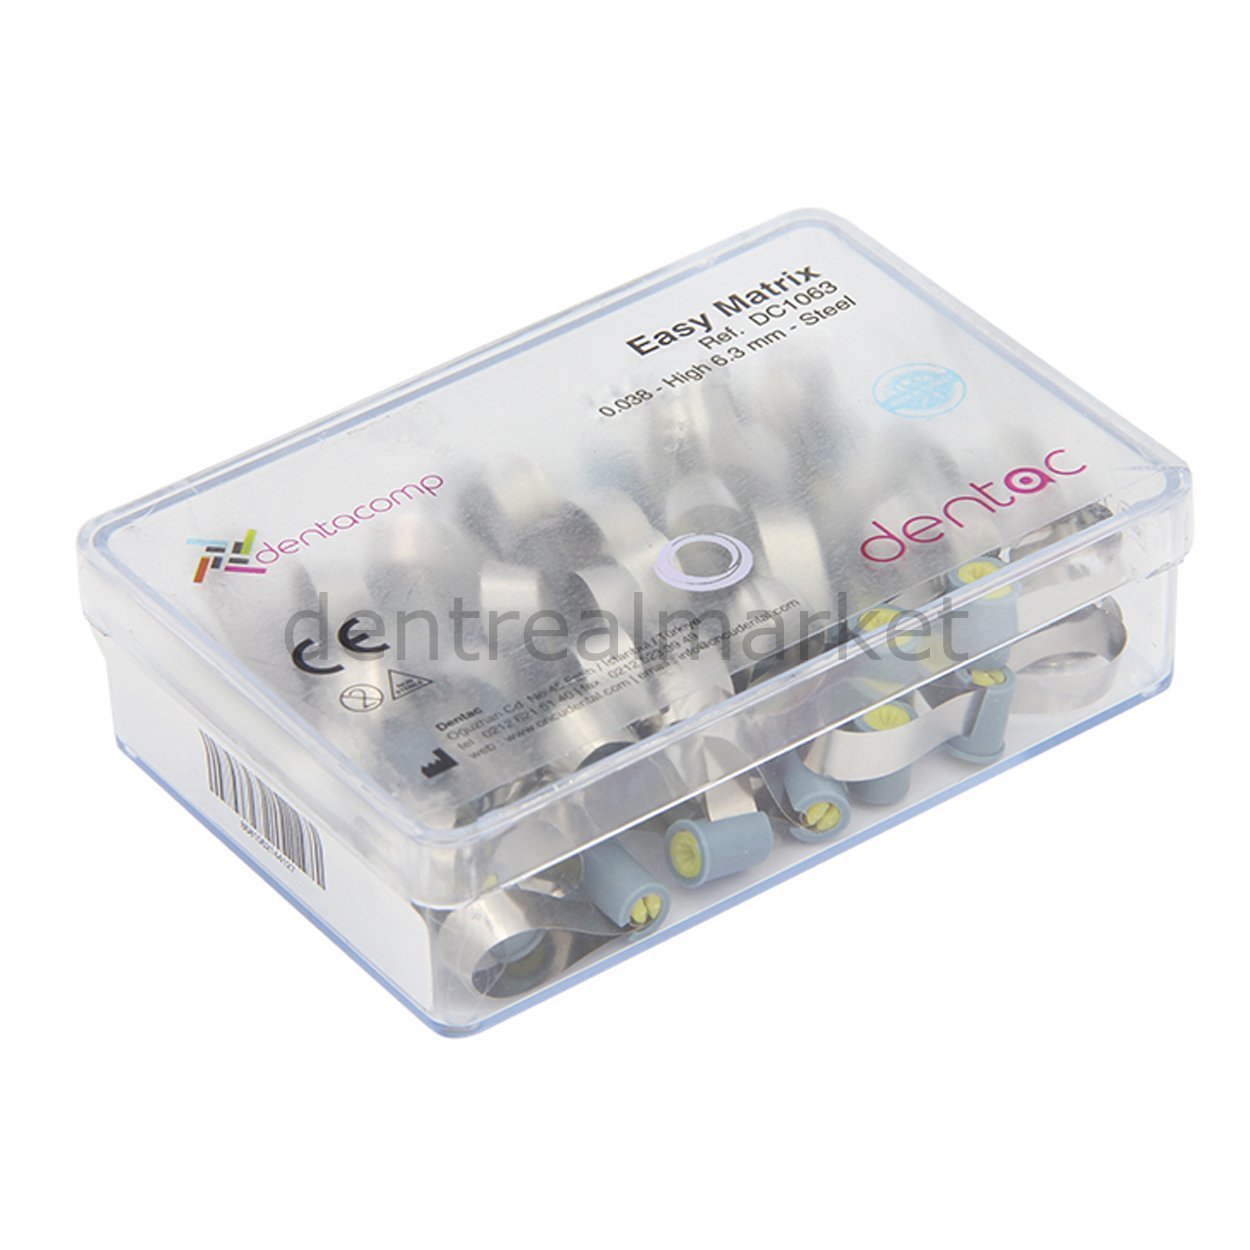 DentrealStore - Dentac Dentacomp Easy Matrix - Kerr Supercap Alternative - 6.3 mm Matrice Band